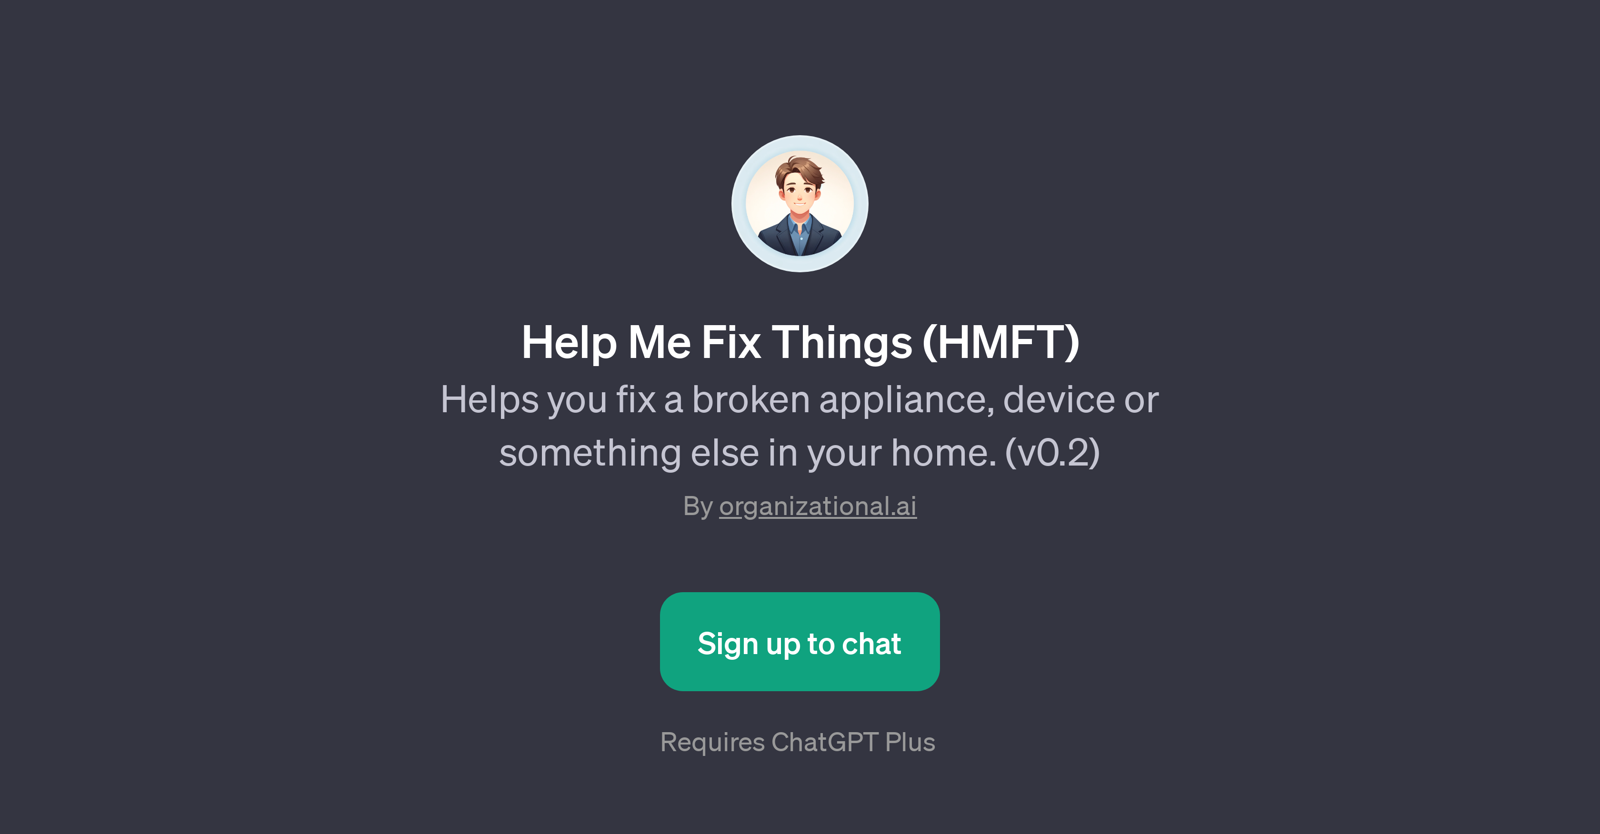 Help Me Fix Things (HMFT) website